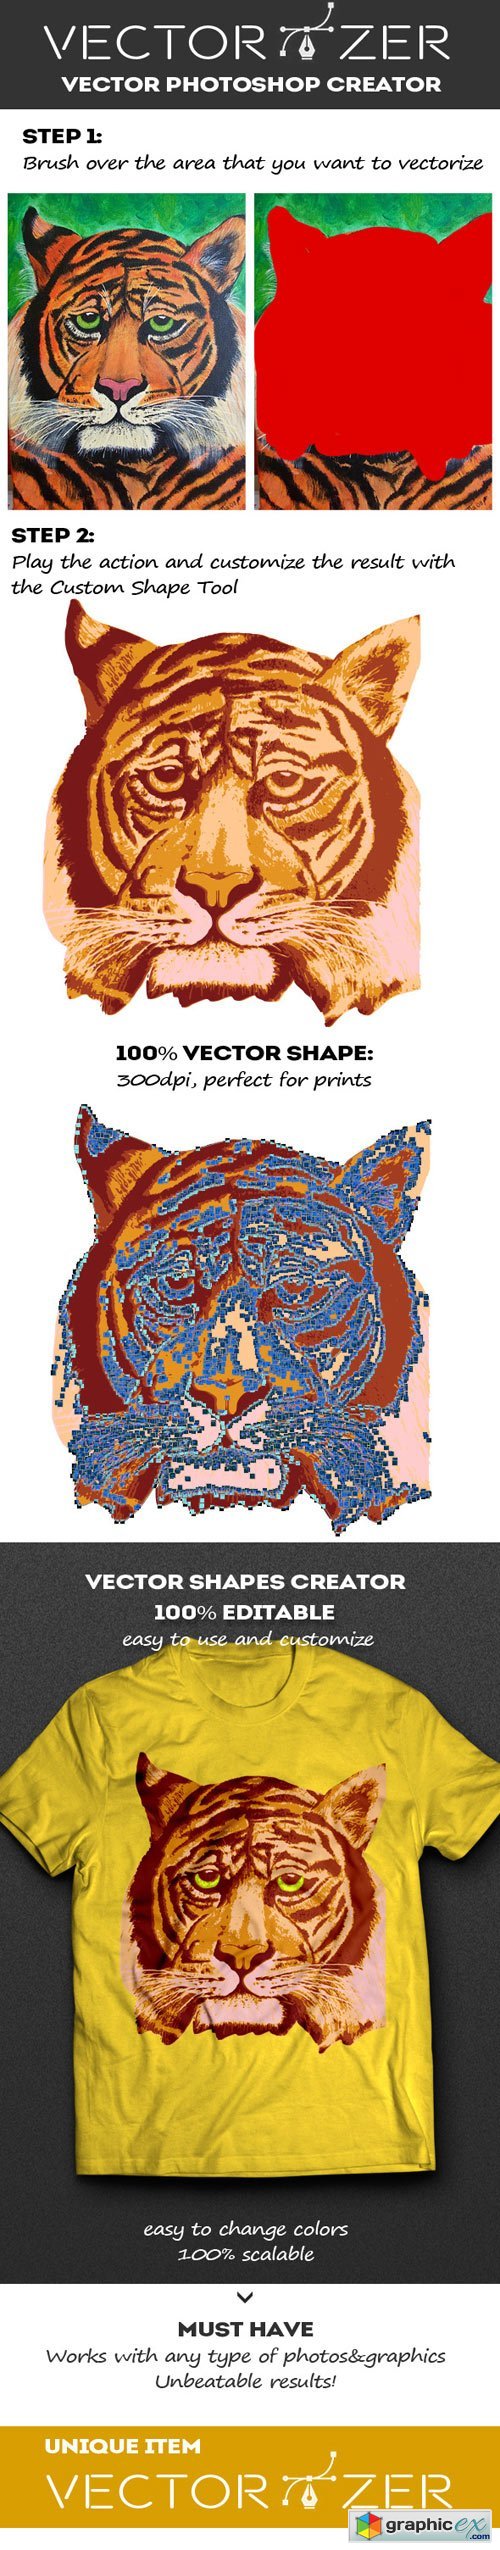 Vectorizer - Vector Photoshop Creator